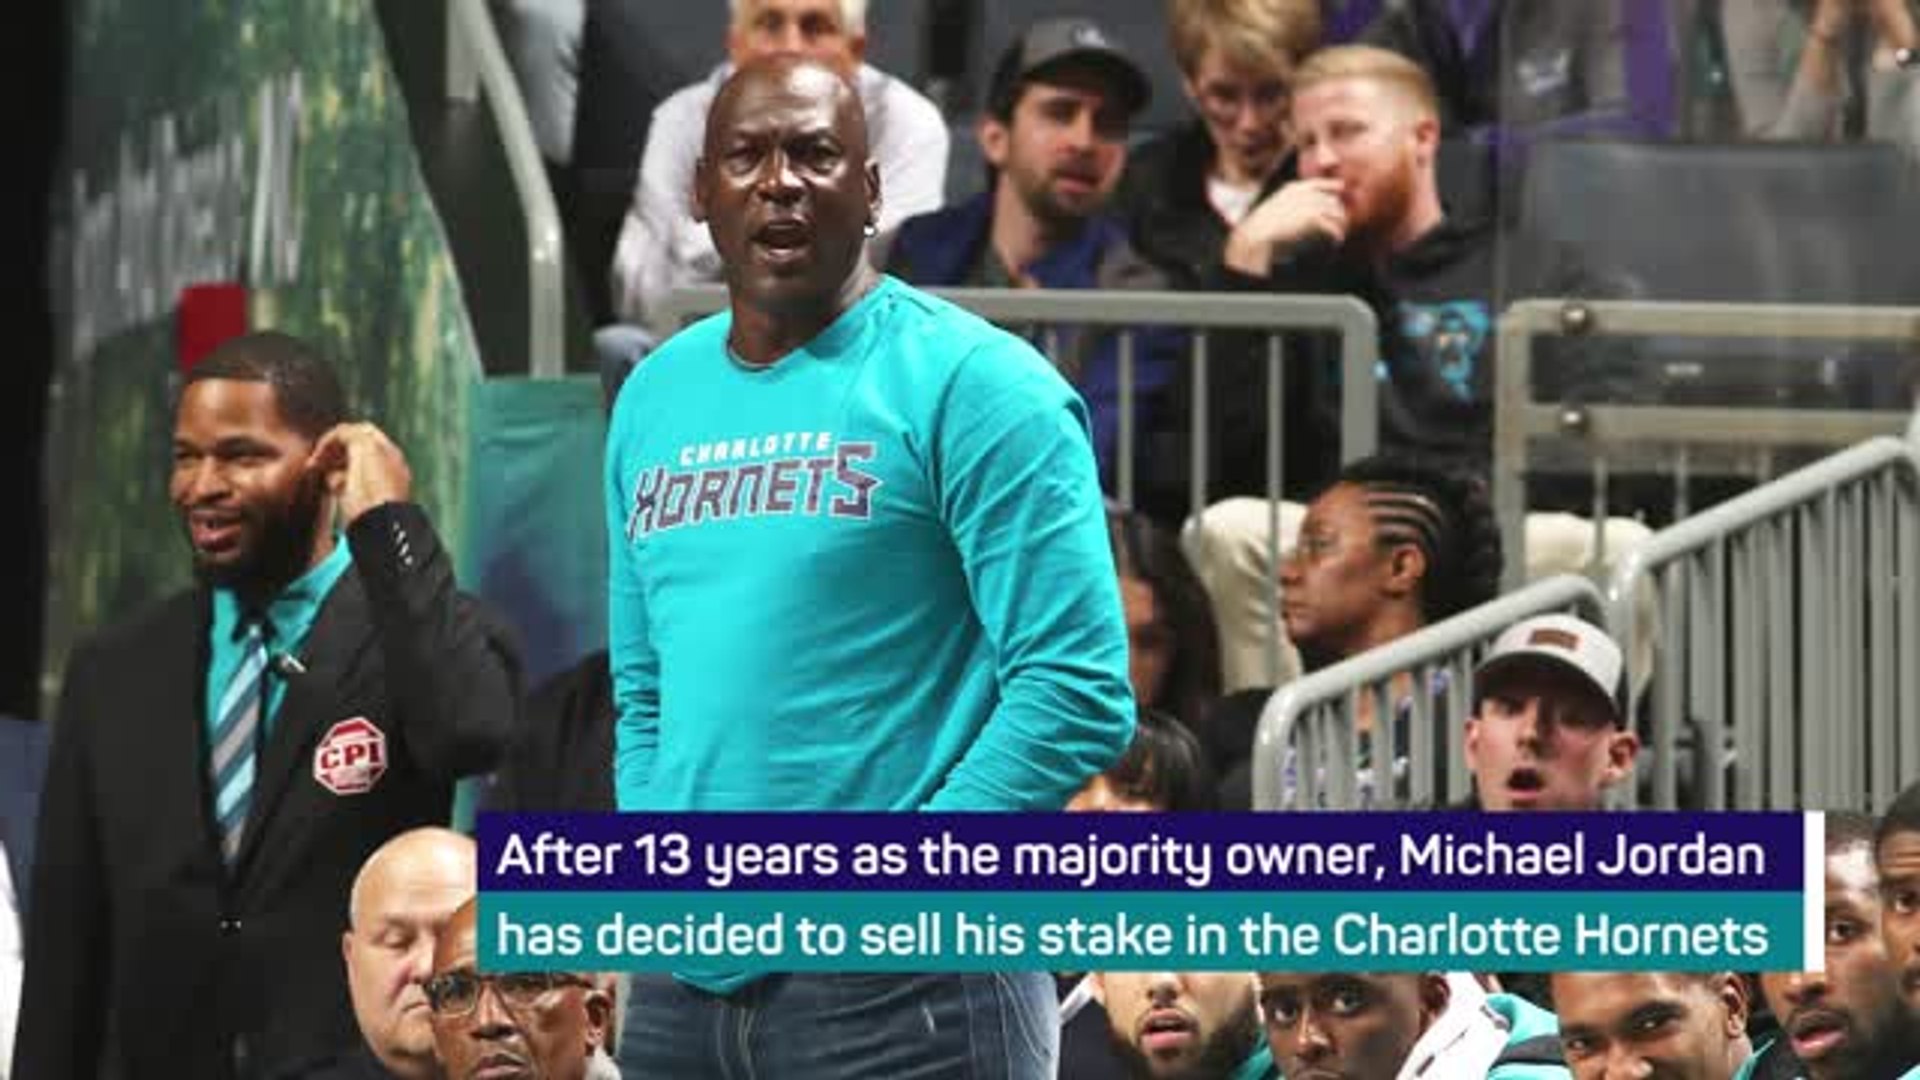 Michael Jordan to sell Charlotte Hornets stake - video Dailymotion